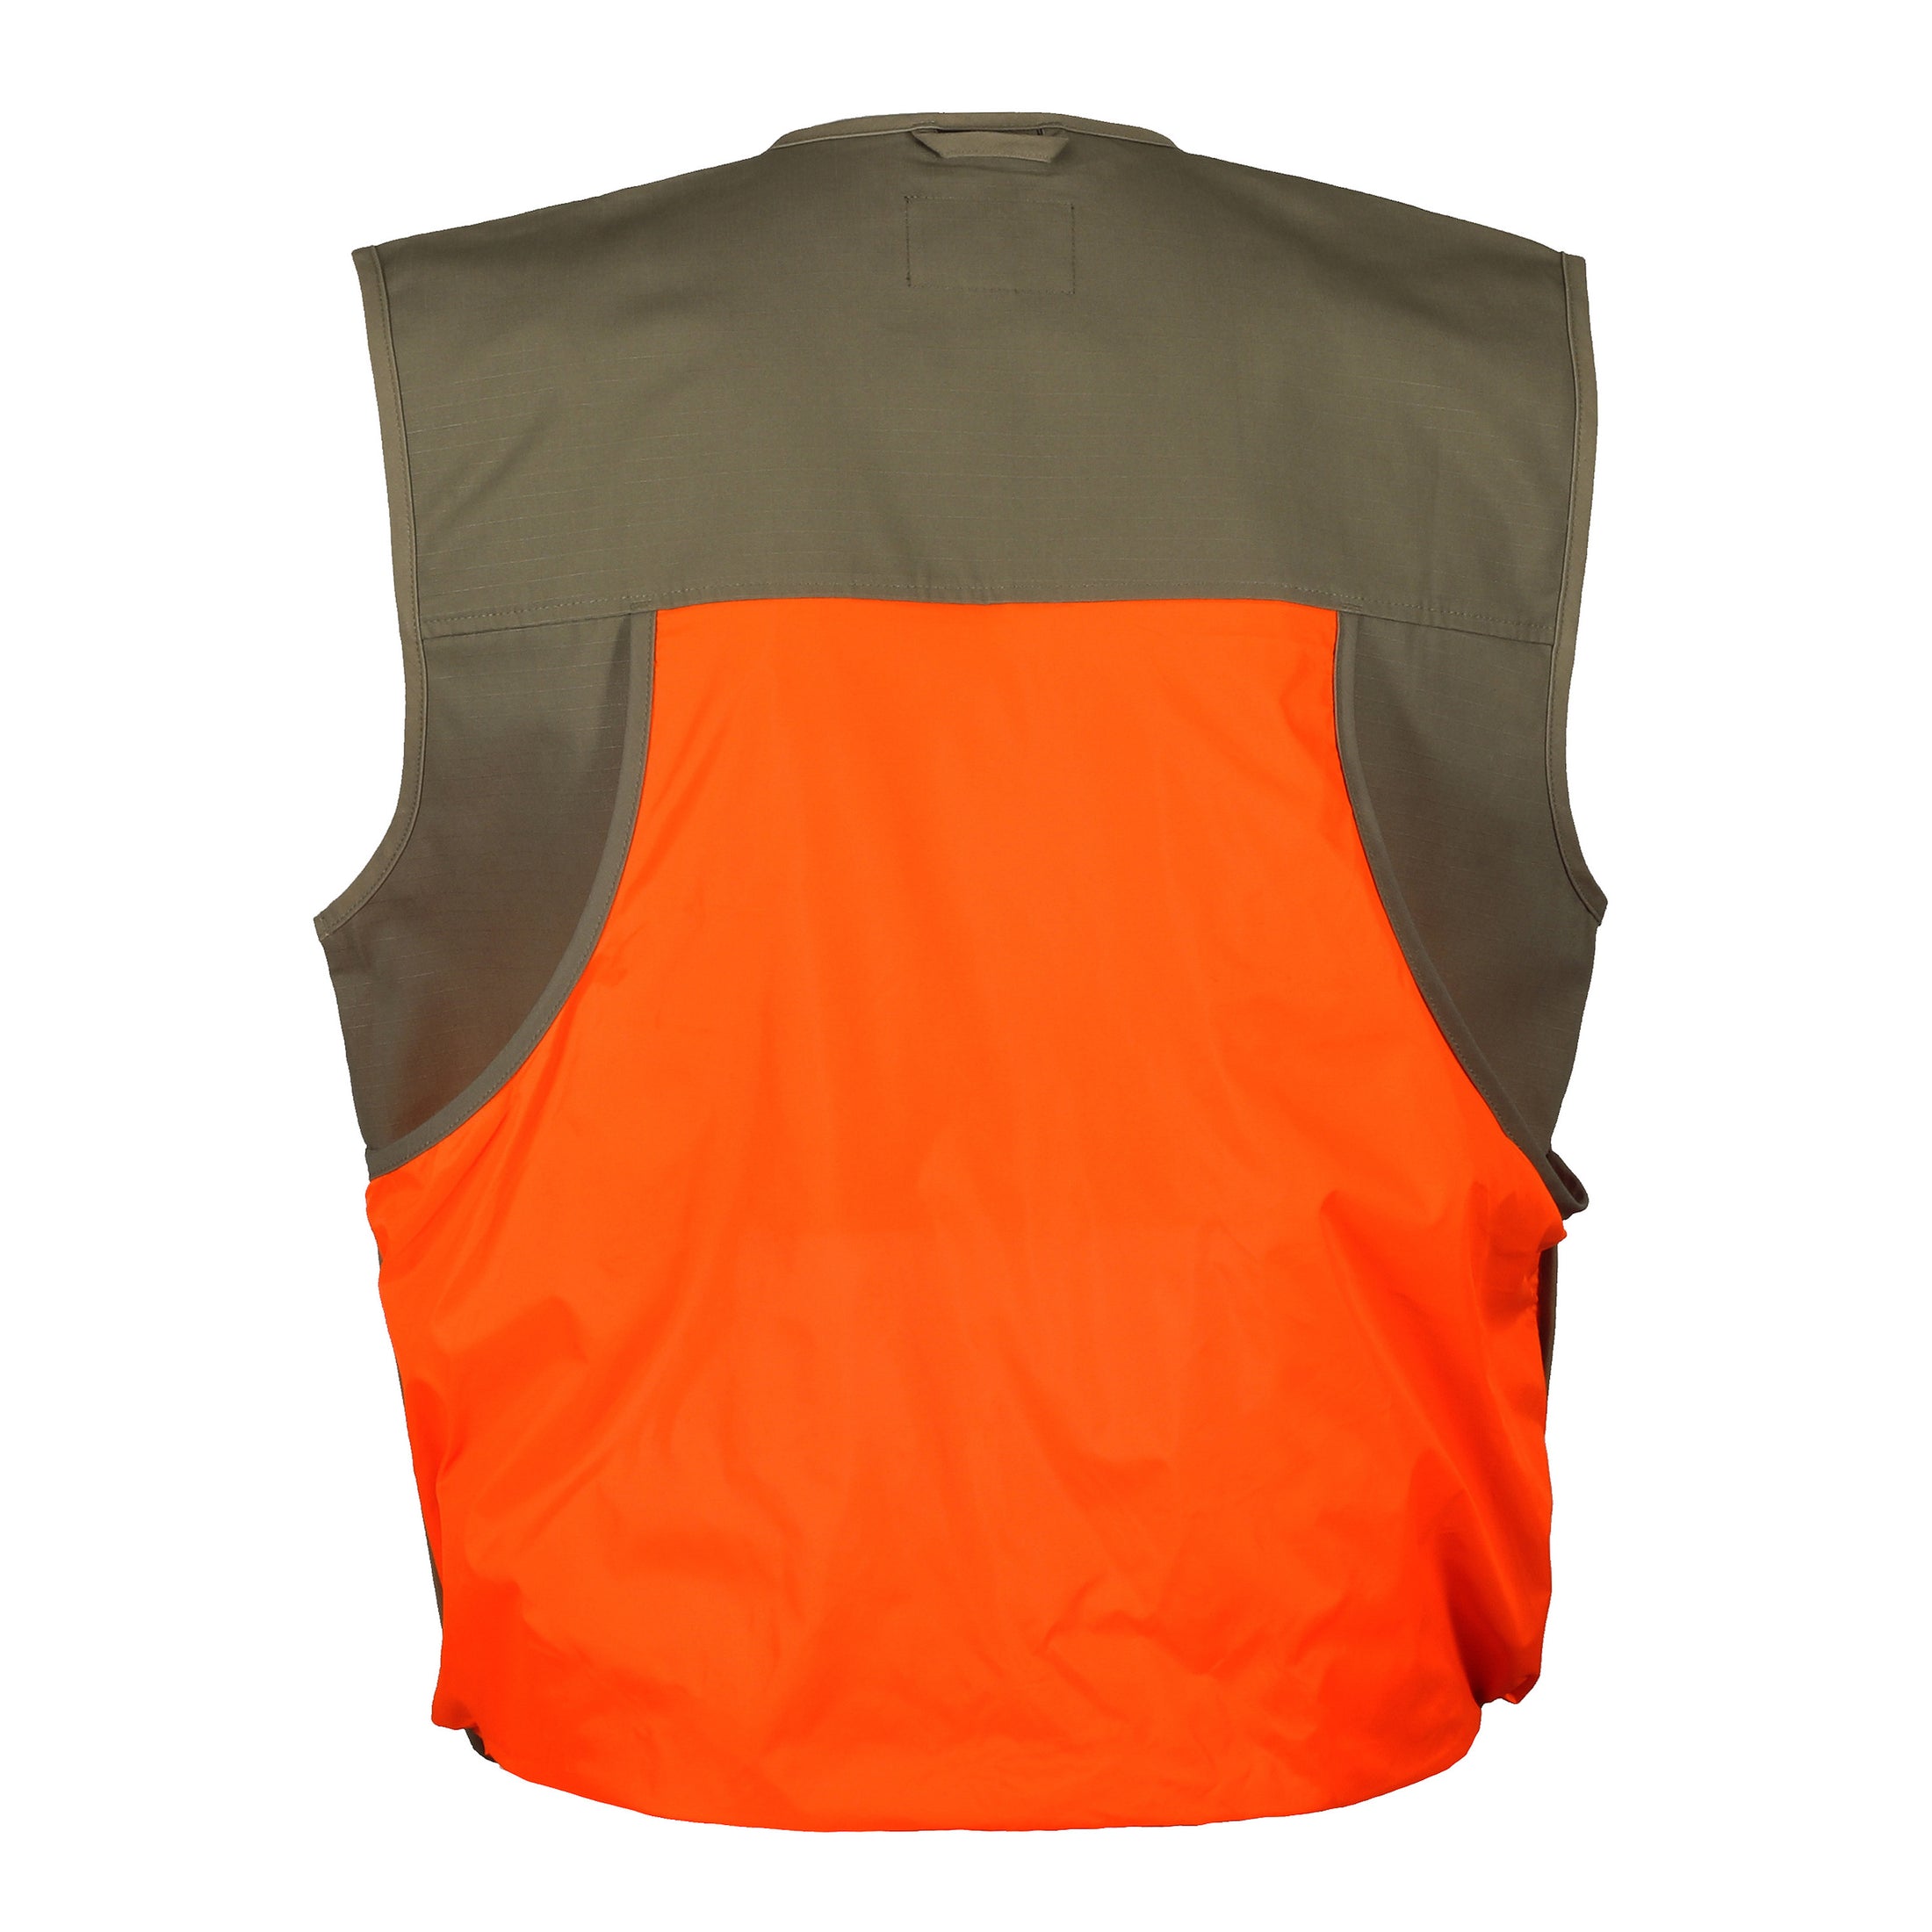 gamehide shelterbelt vest back view (khaki/blaze orange)